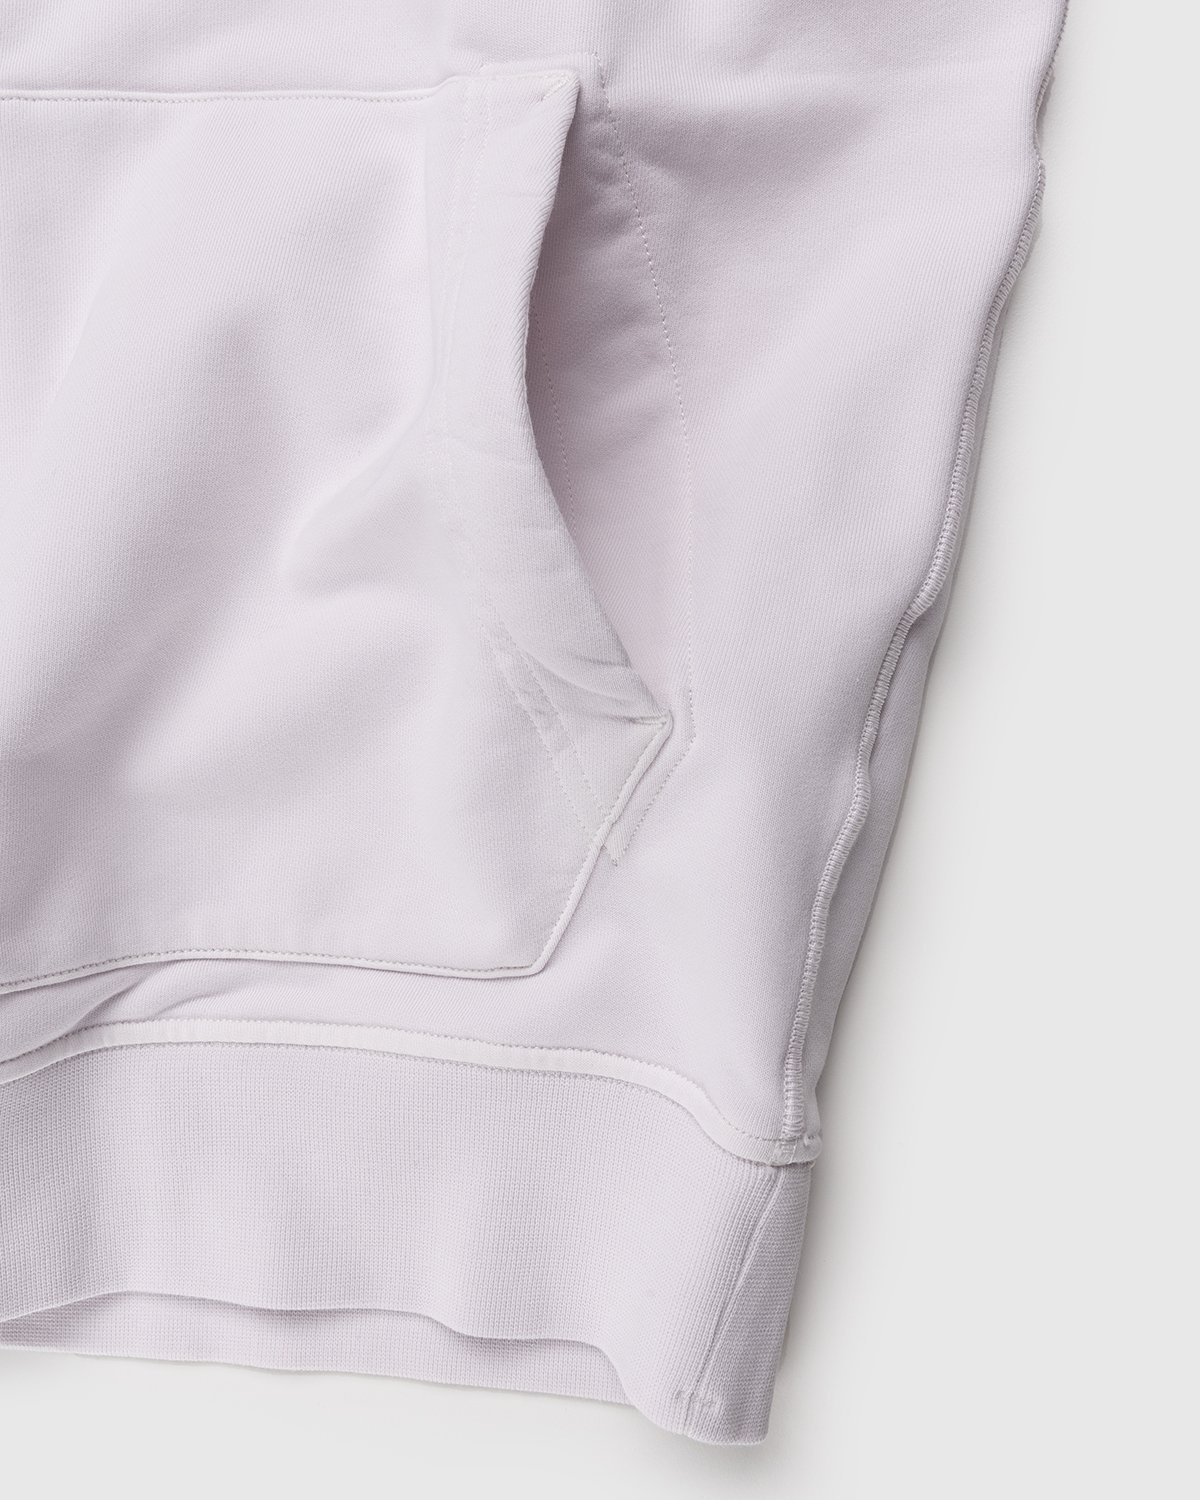 Stone Island – 64151 Garment-Dyed Cotton Fleece Hoodie Pink - Sweats - Pink - Image 5